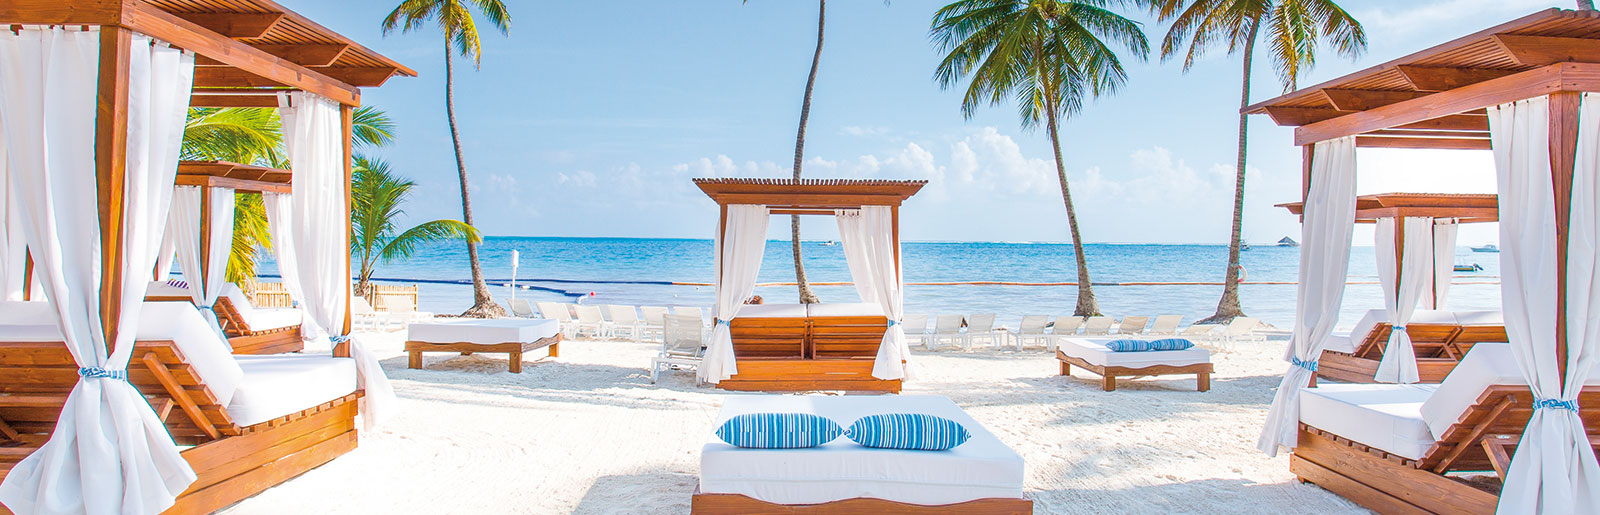 Resort Caribbean Relax